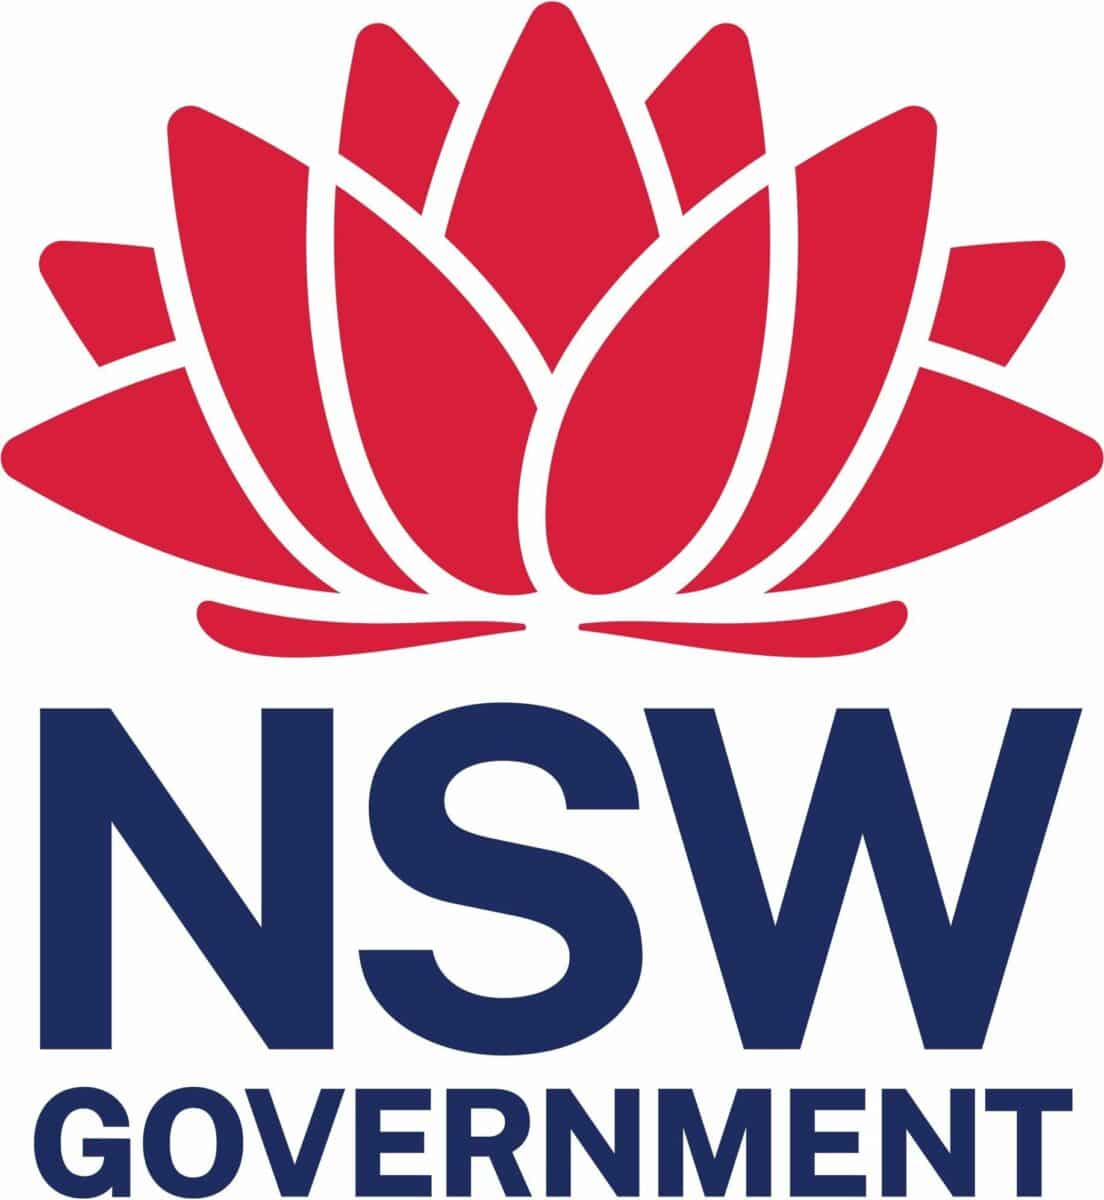 Waratah Nsw Government Logo Colour Small Jpg8